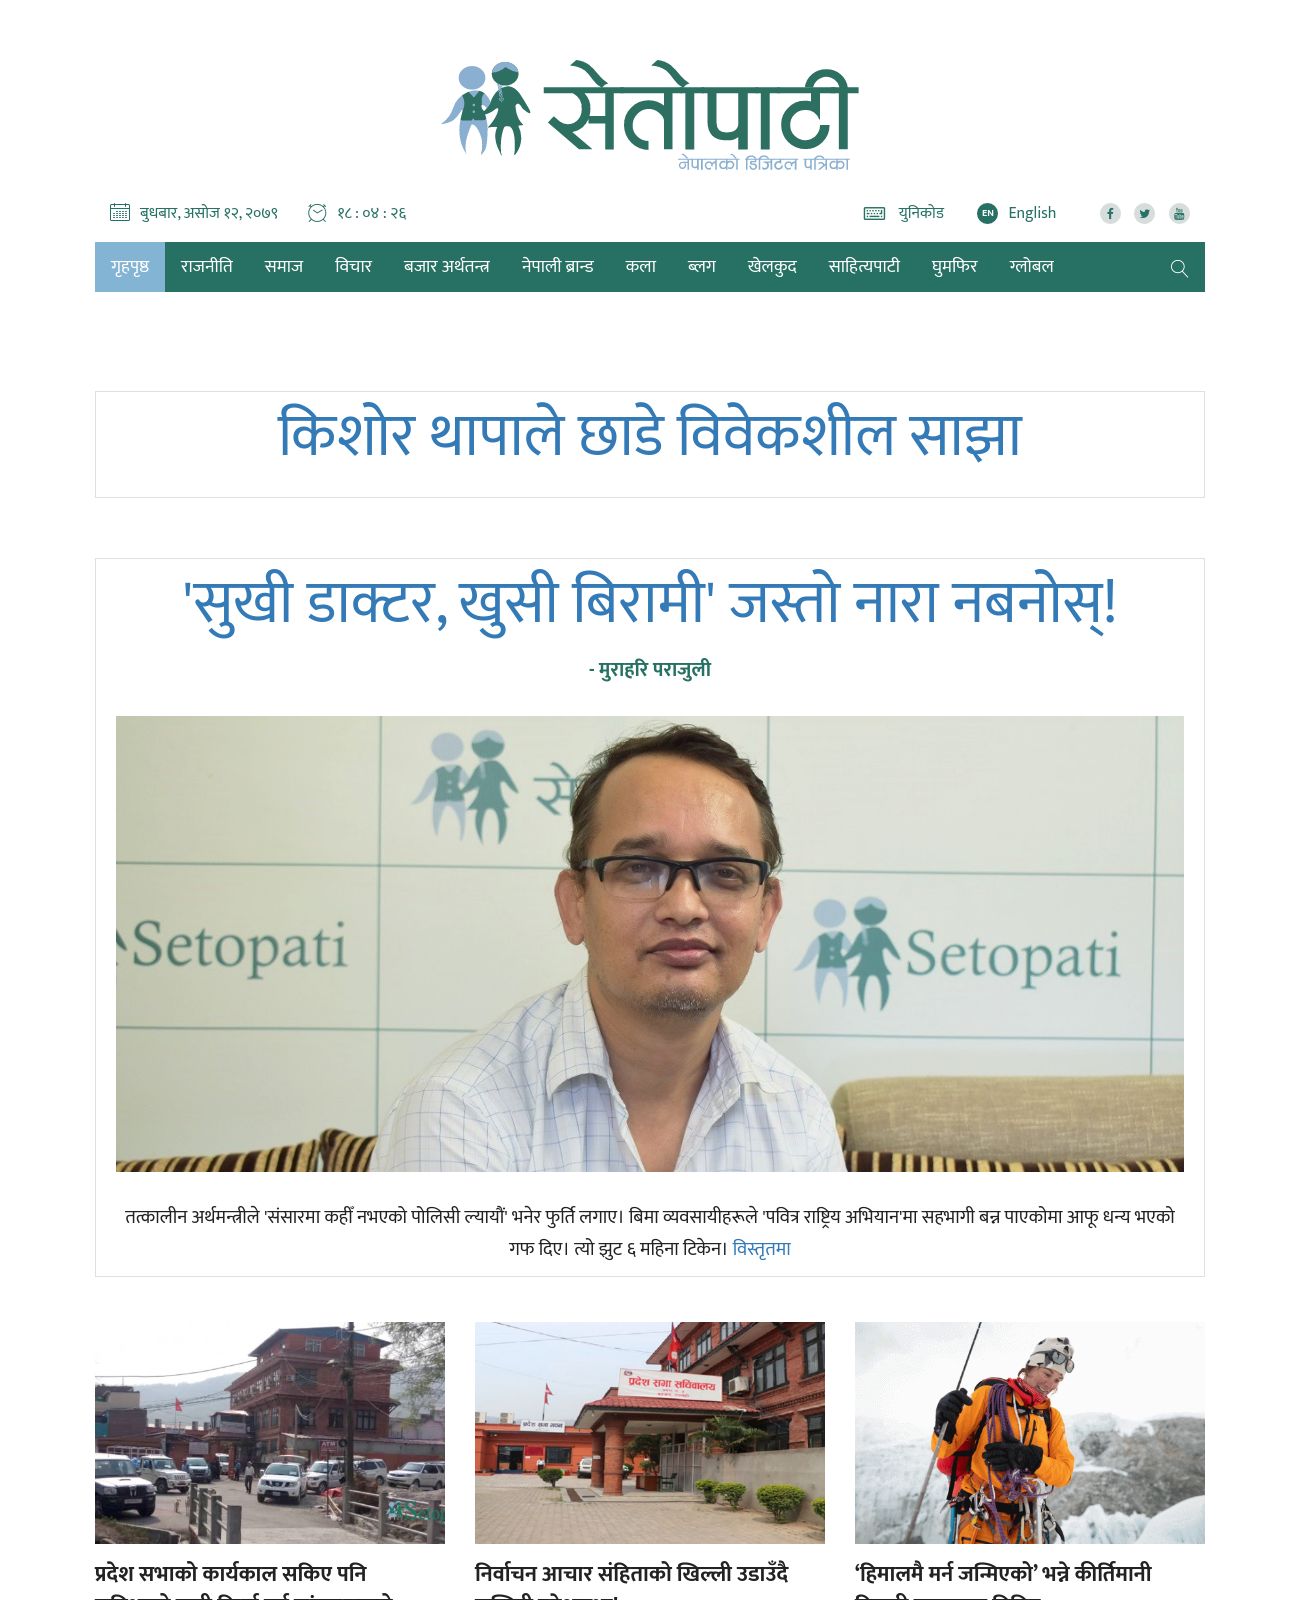 Setopati at 2022-09-29 01:27:44+05:45 local time